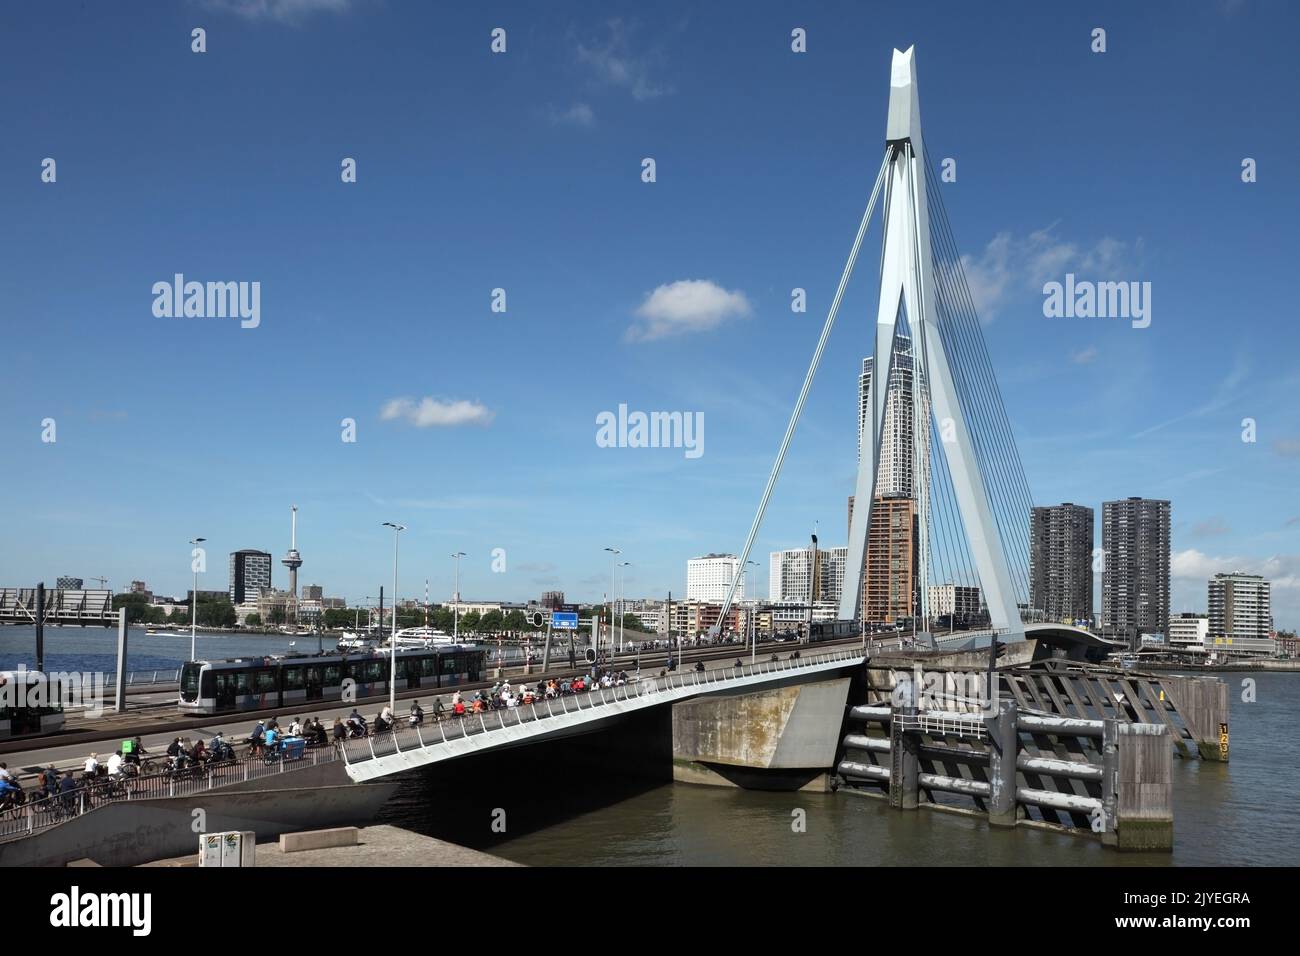 The Erasmusbrug or Erasmus Bridge (1996), Rotterdam, Netherlands. Stock Photo